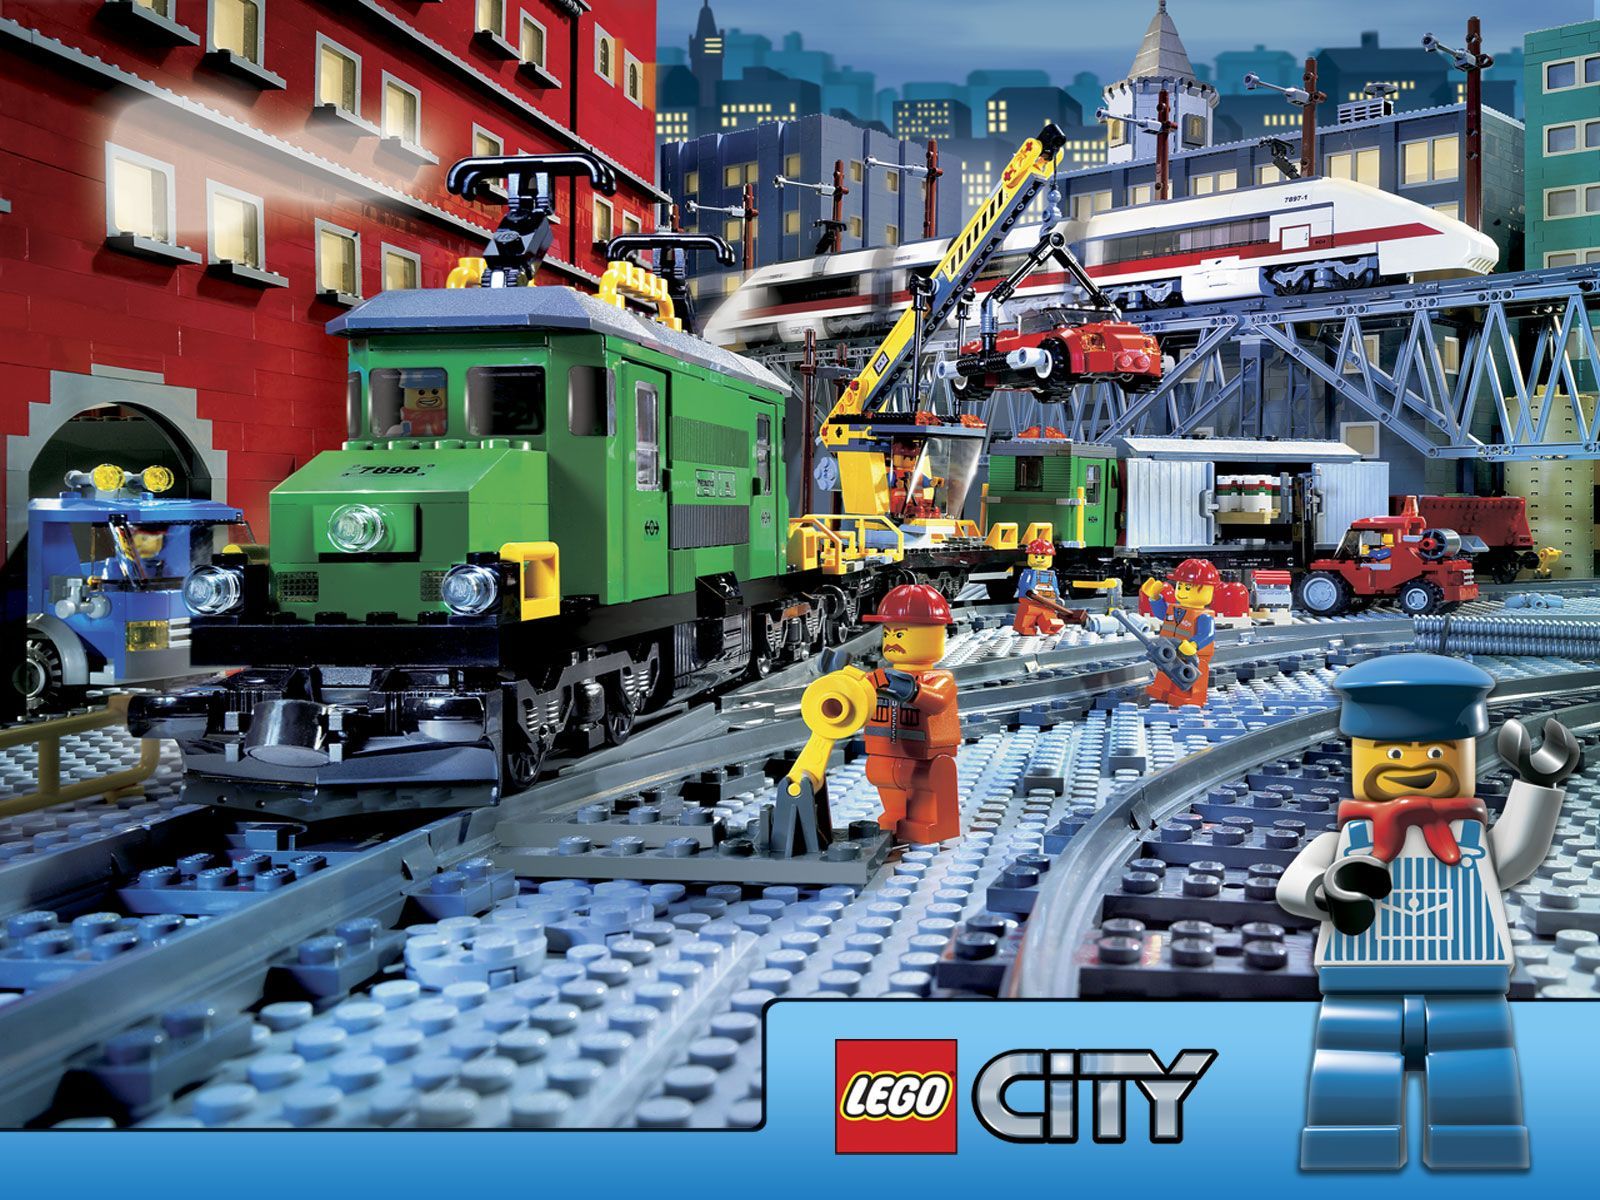 Lego City Wallpaper. Lego city sets, Lego city, Lego wallpaper